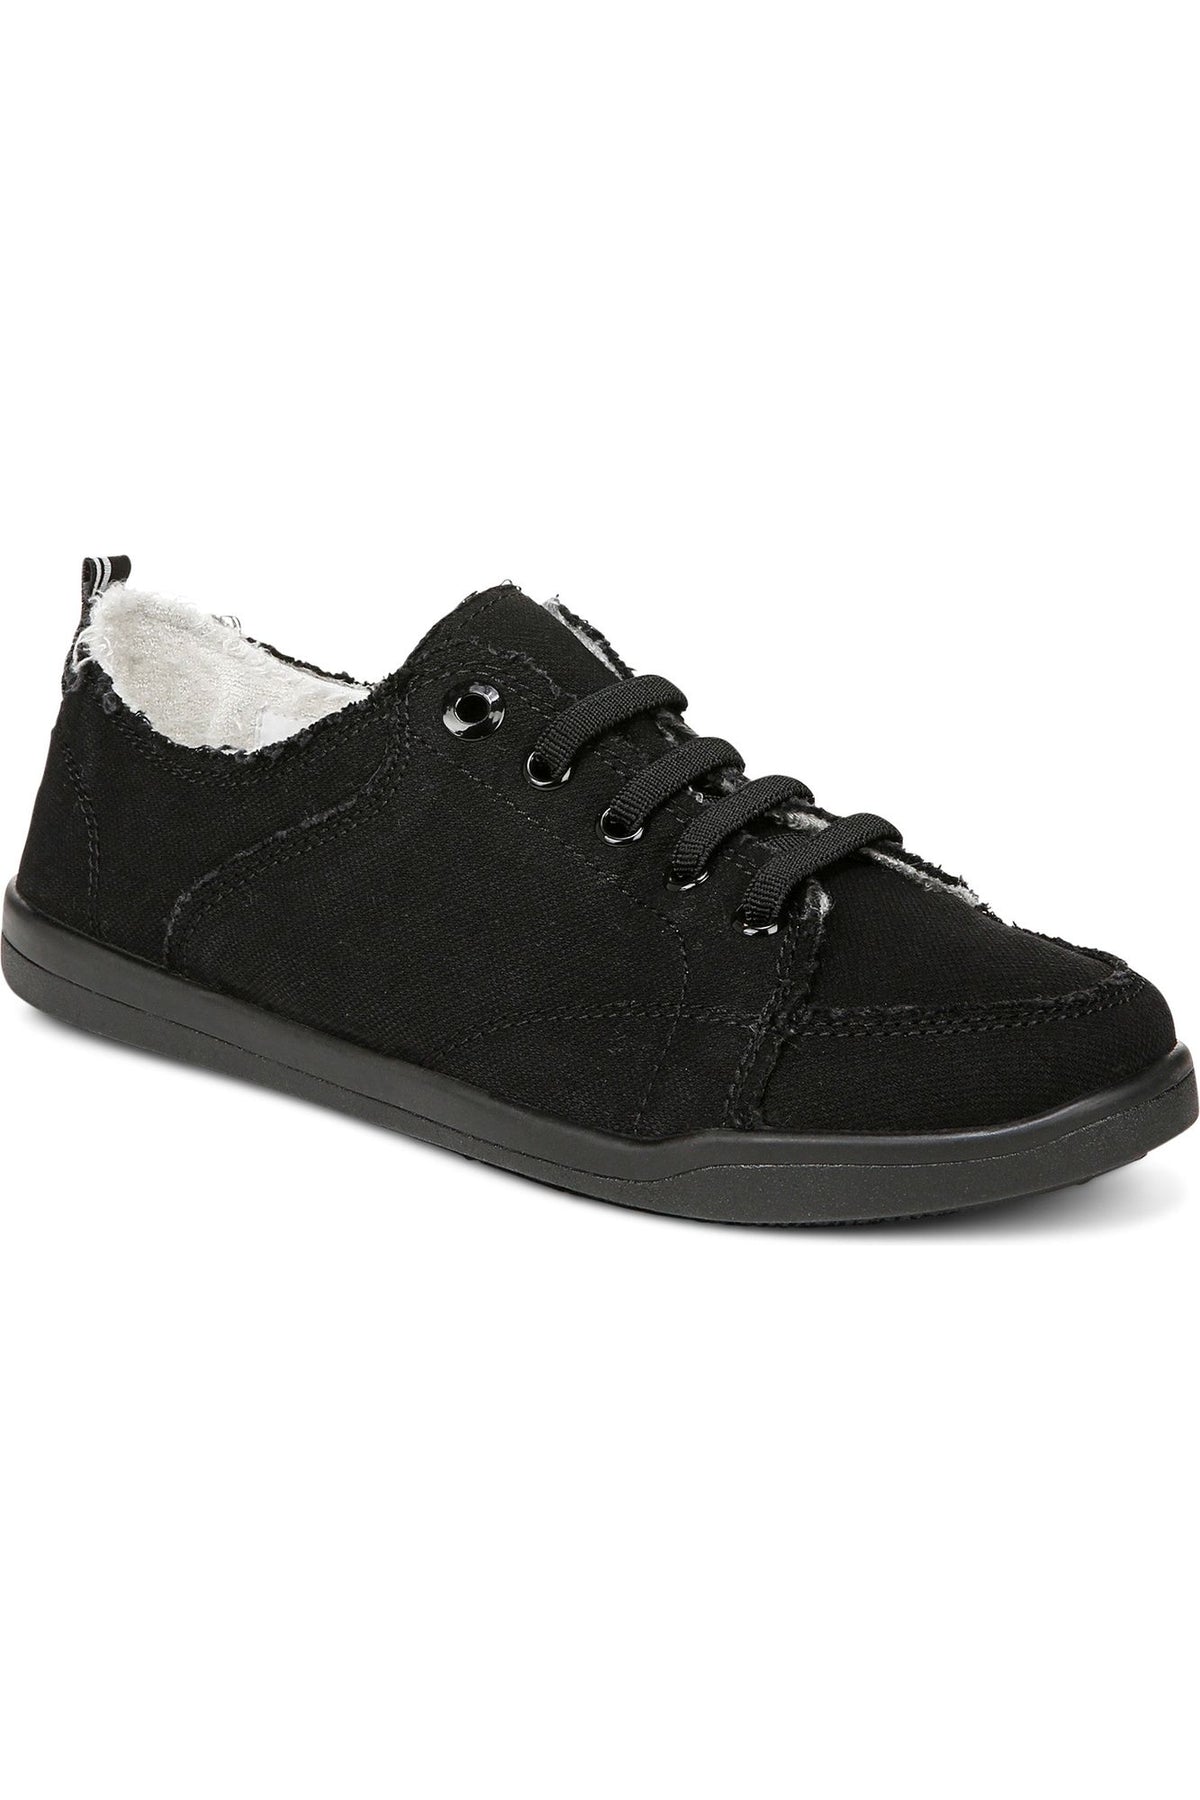 Vionic Canvas Laced Denim Sneaker - Style Pismo CNVS, black denim, side1